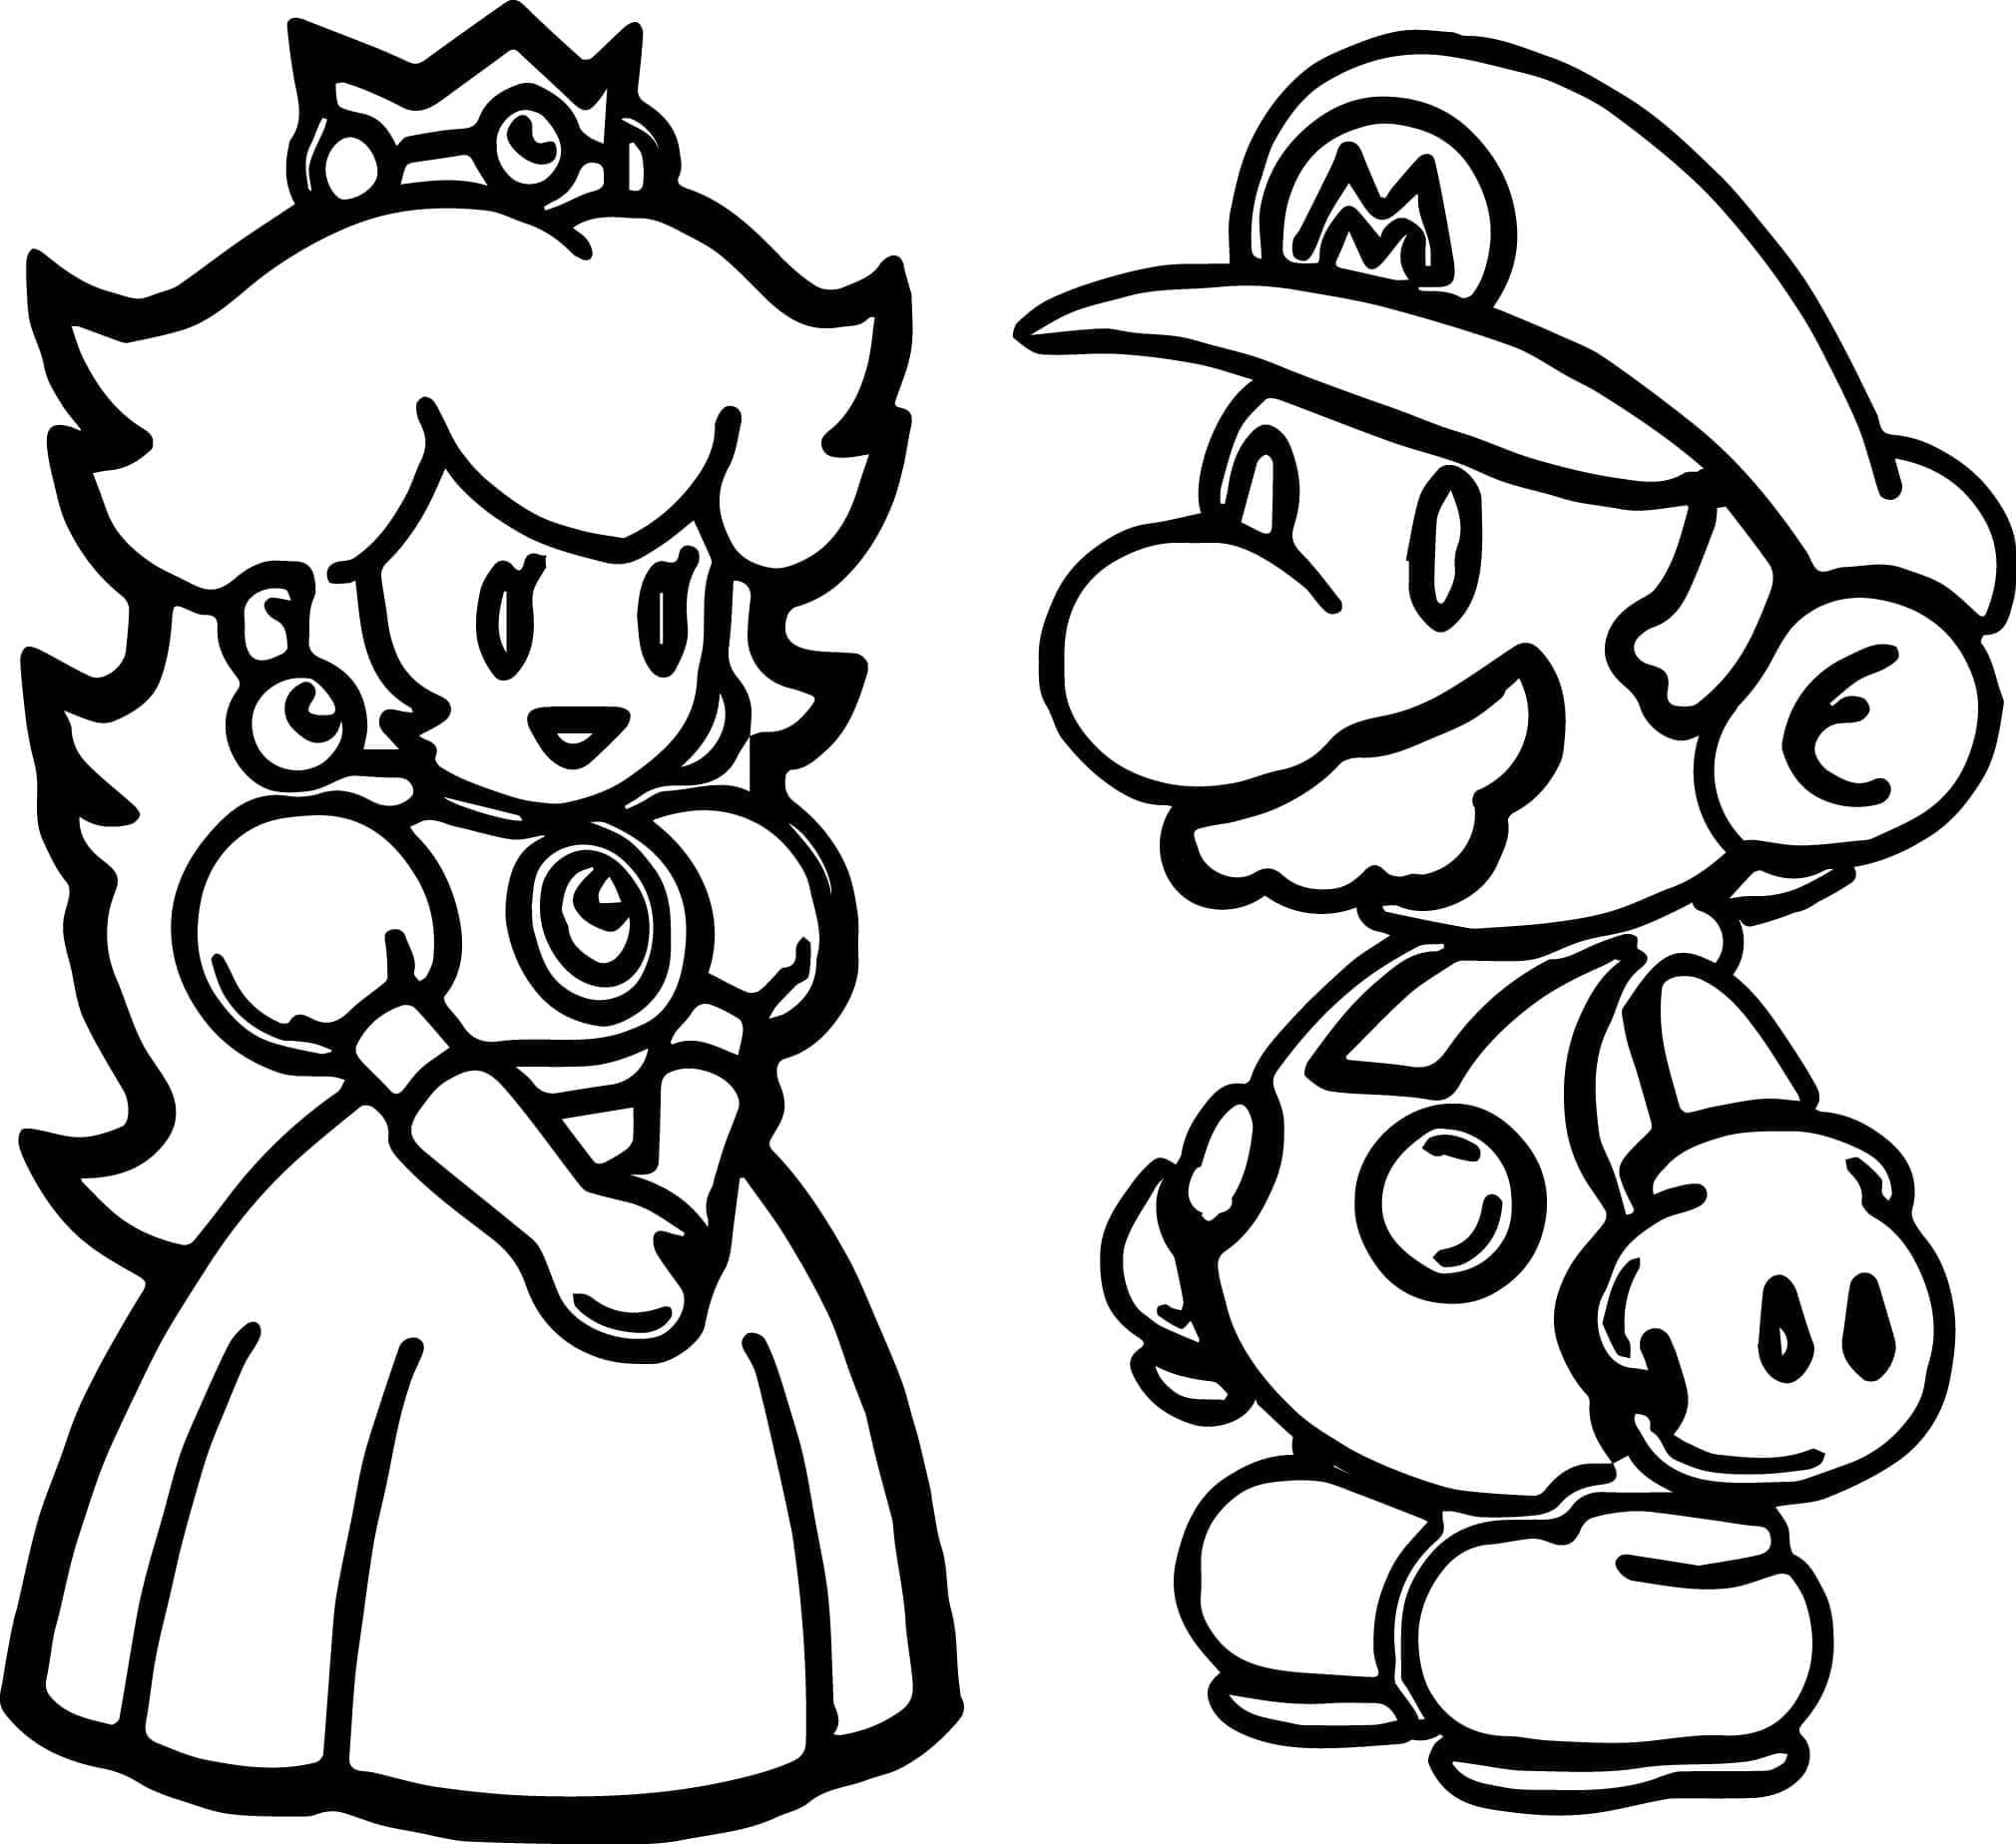 Chibi Princesse Peach et Mario coloring page